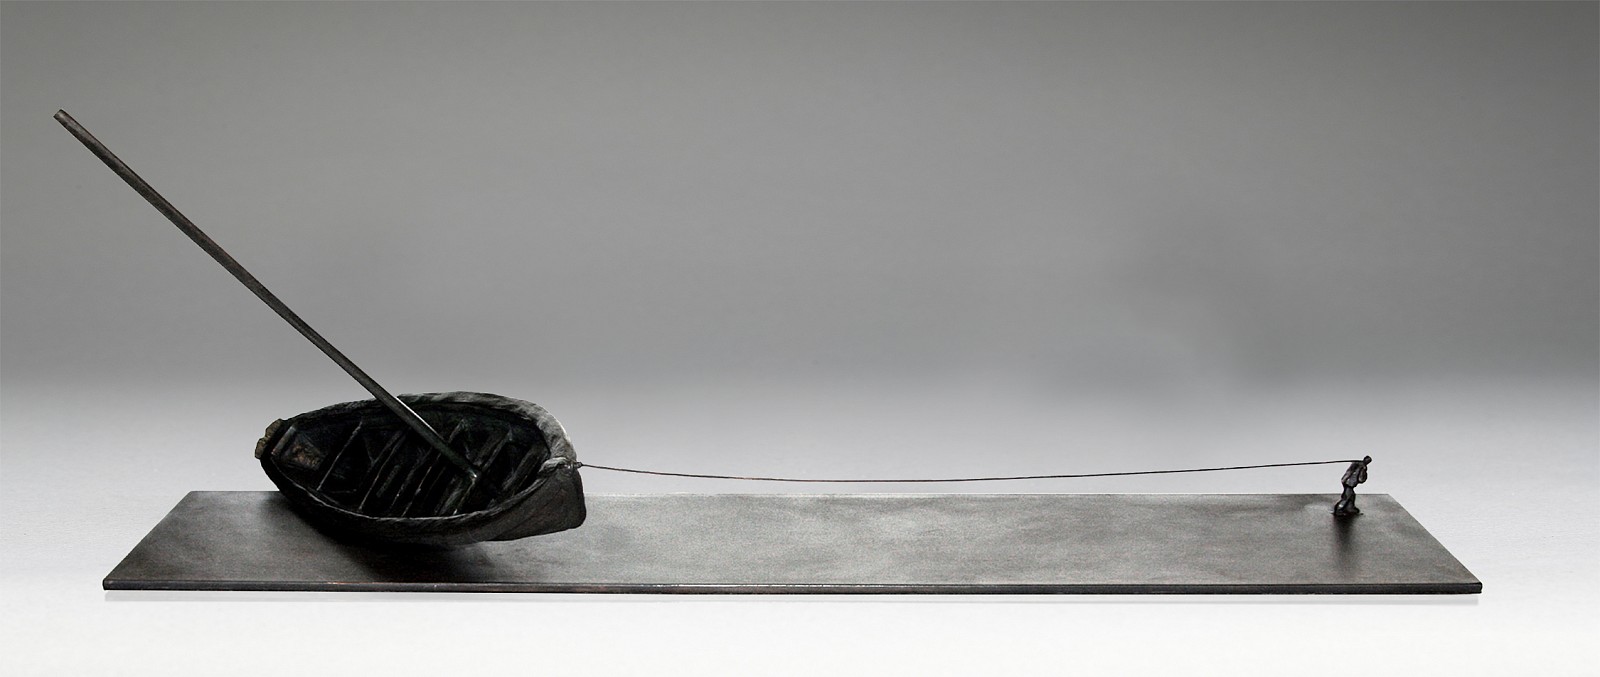 Jim Rennert, Making Headway, Edition of 45, 2007
bronze, 18 x 30 x 15 in. (45.7 x 76.2 x 38.1 cm)